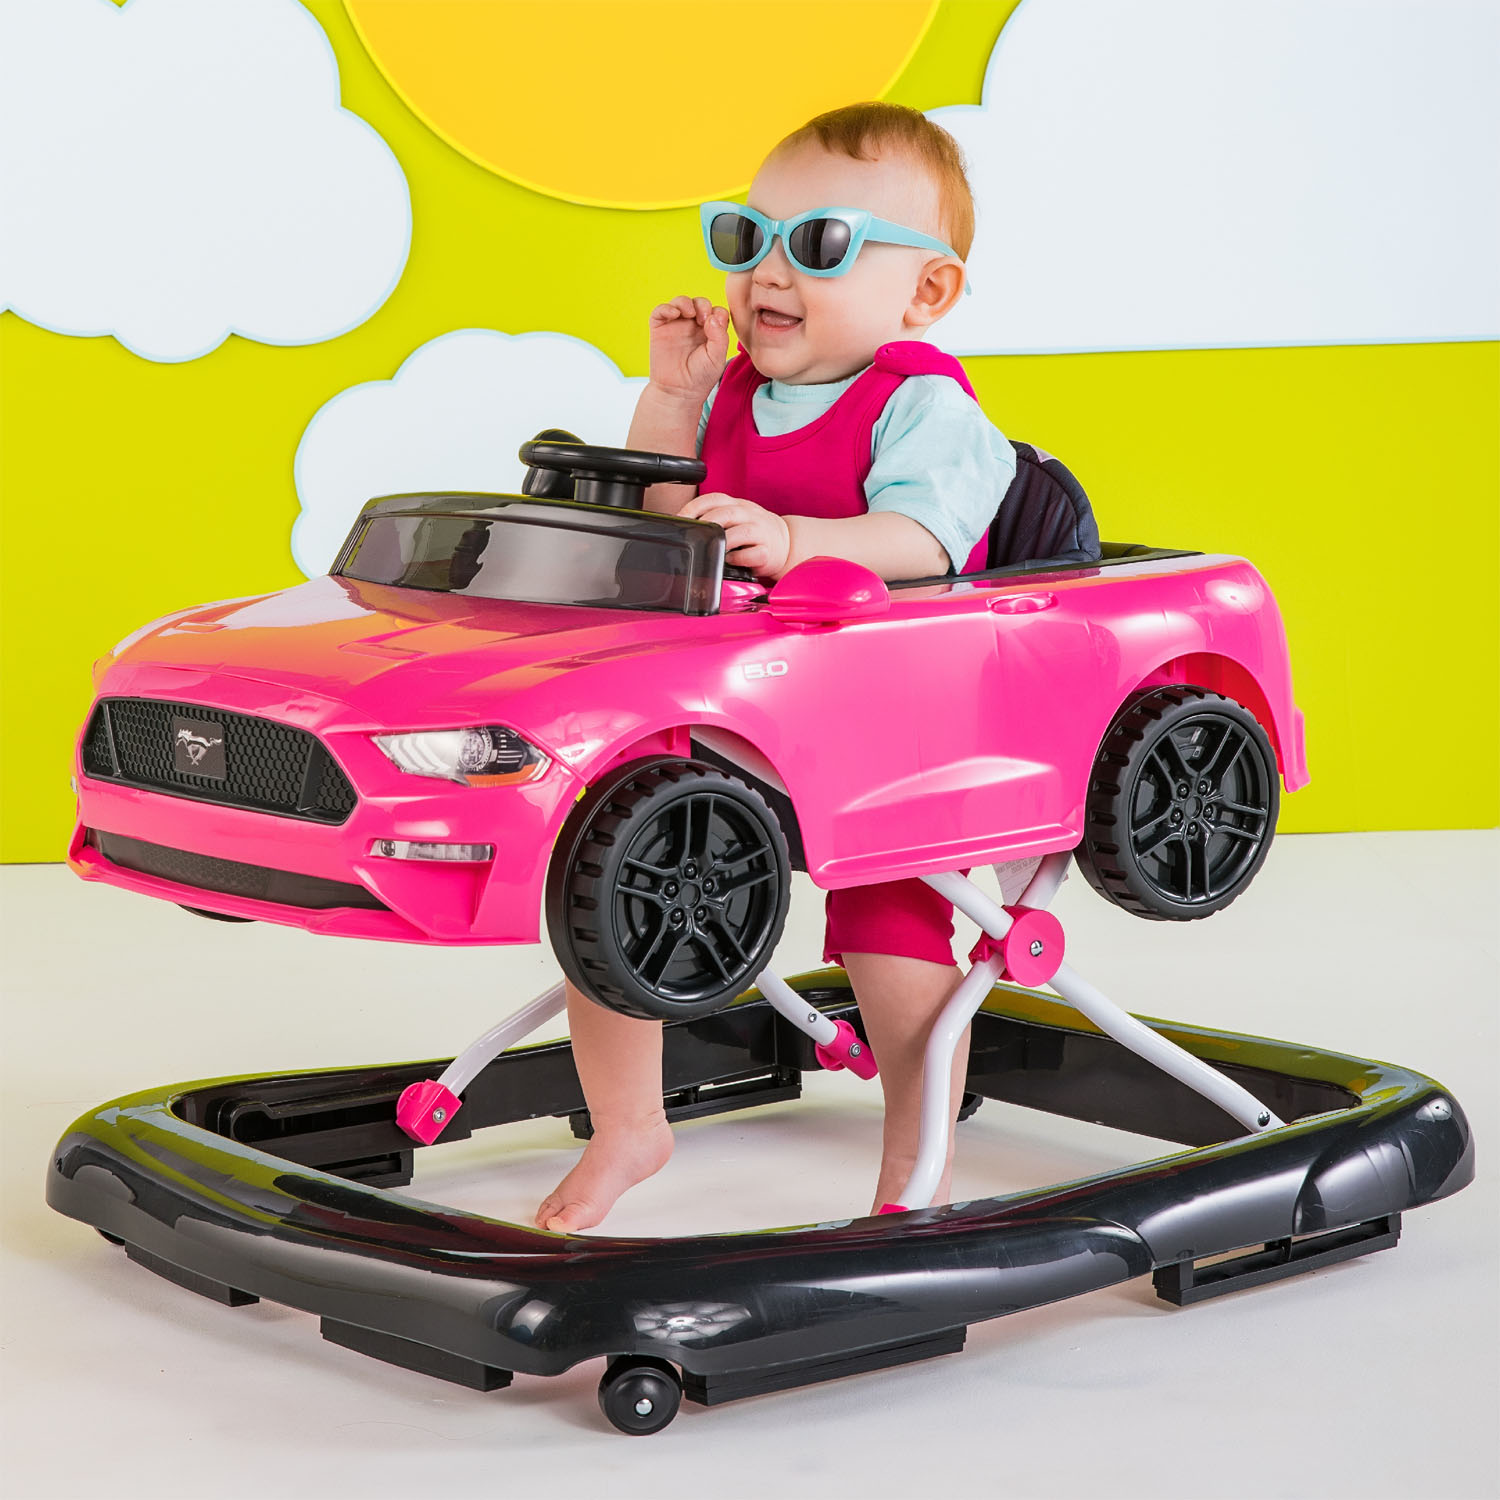 baby pink car walker